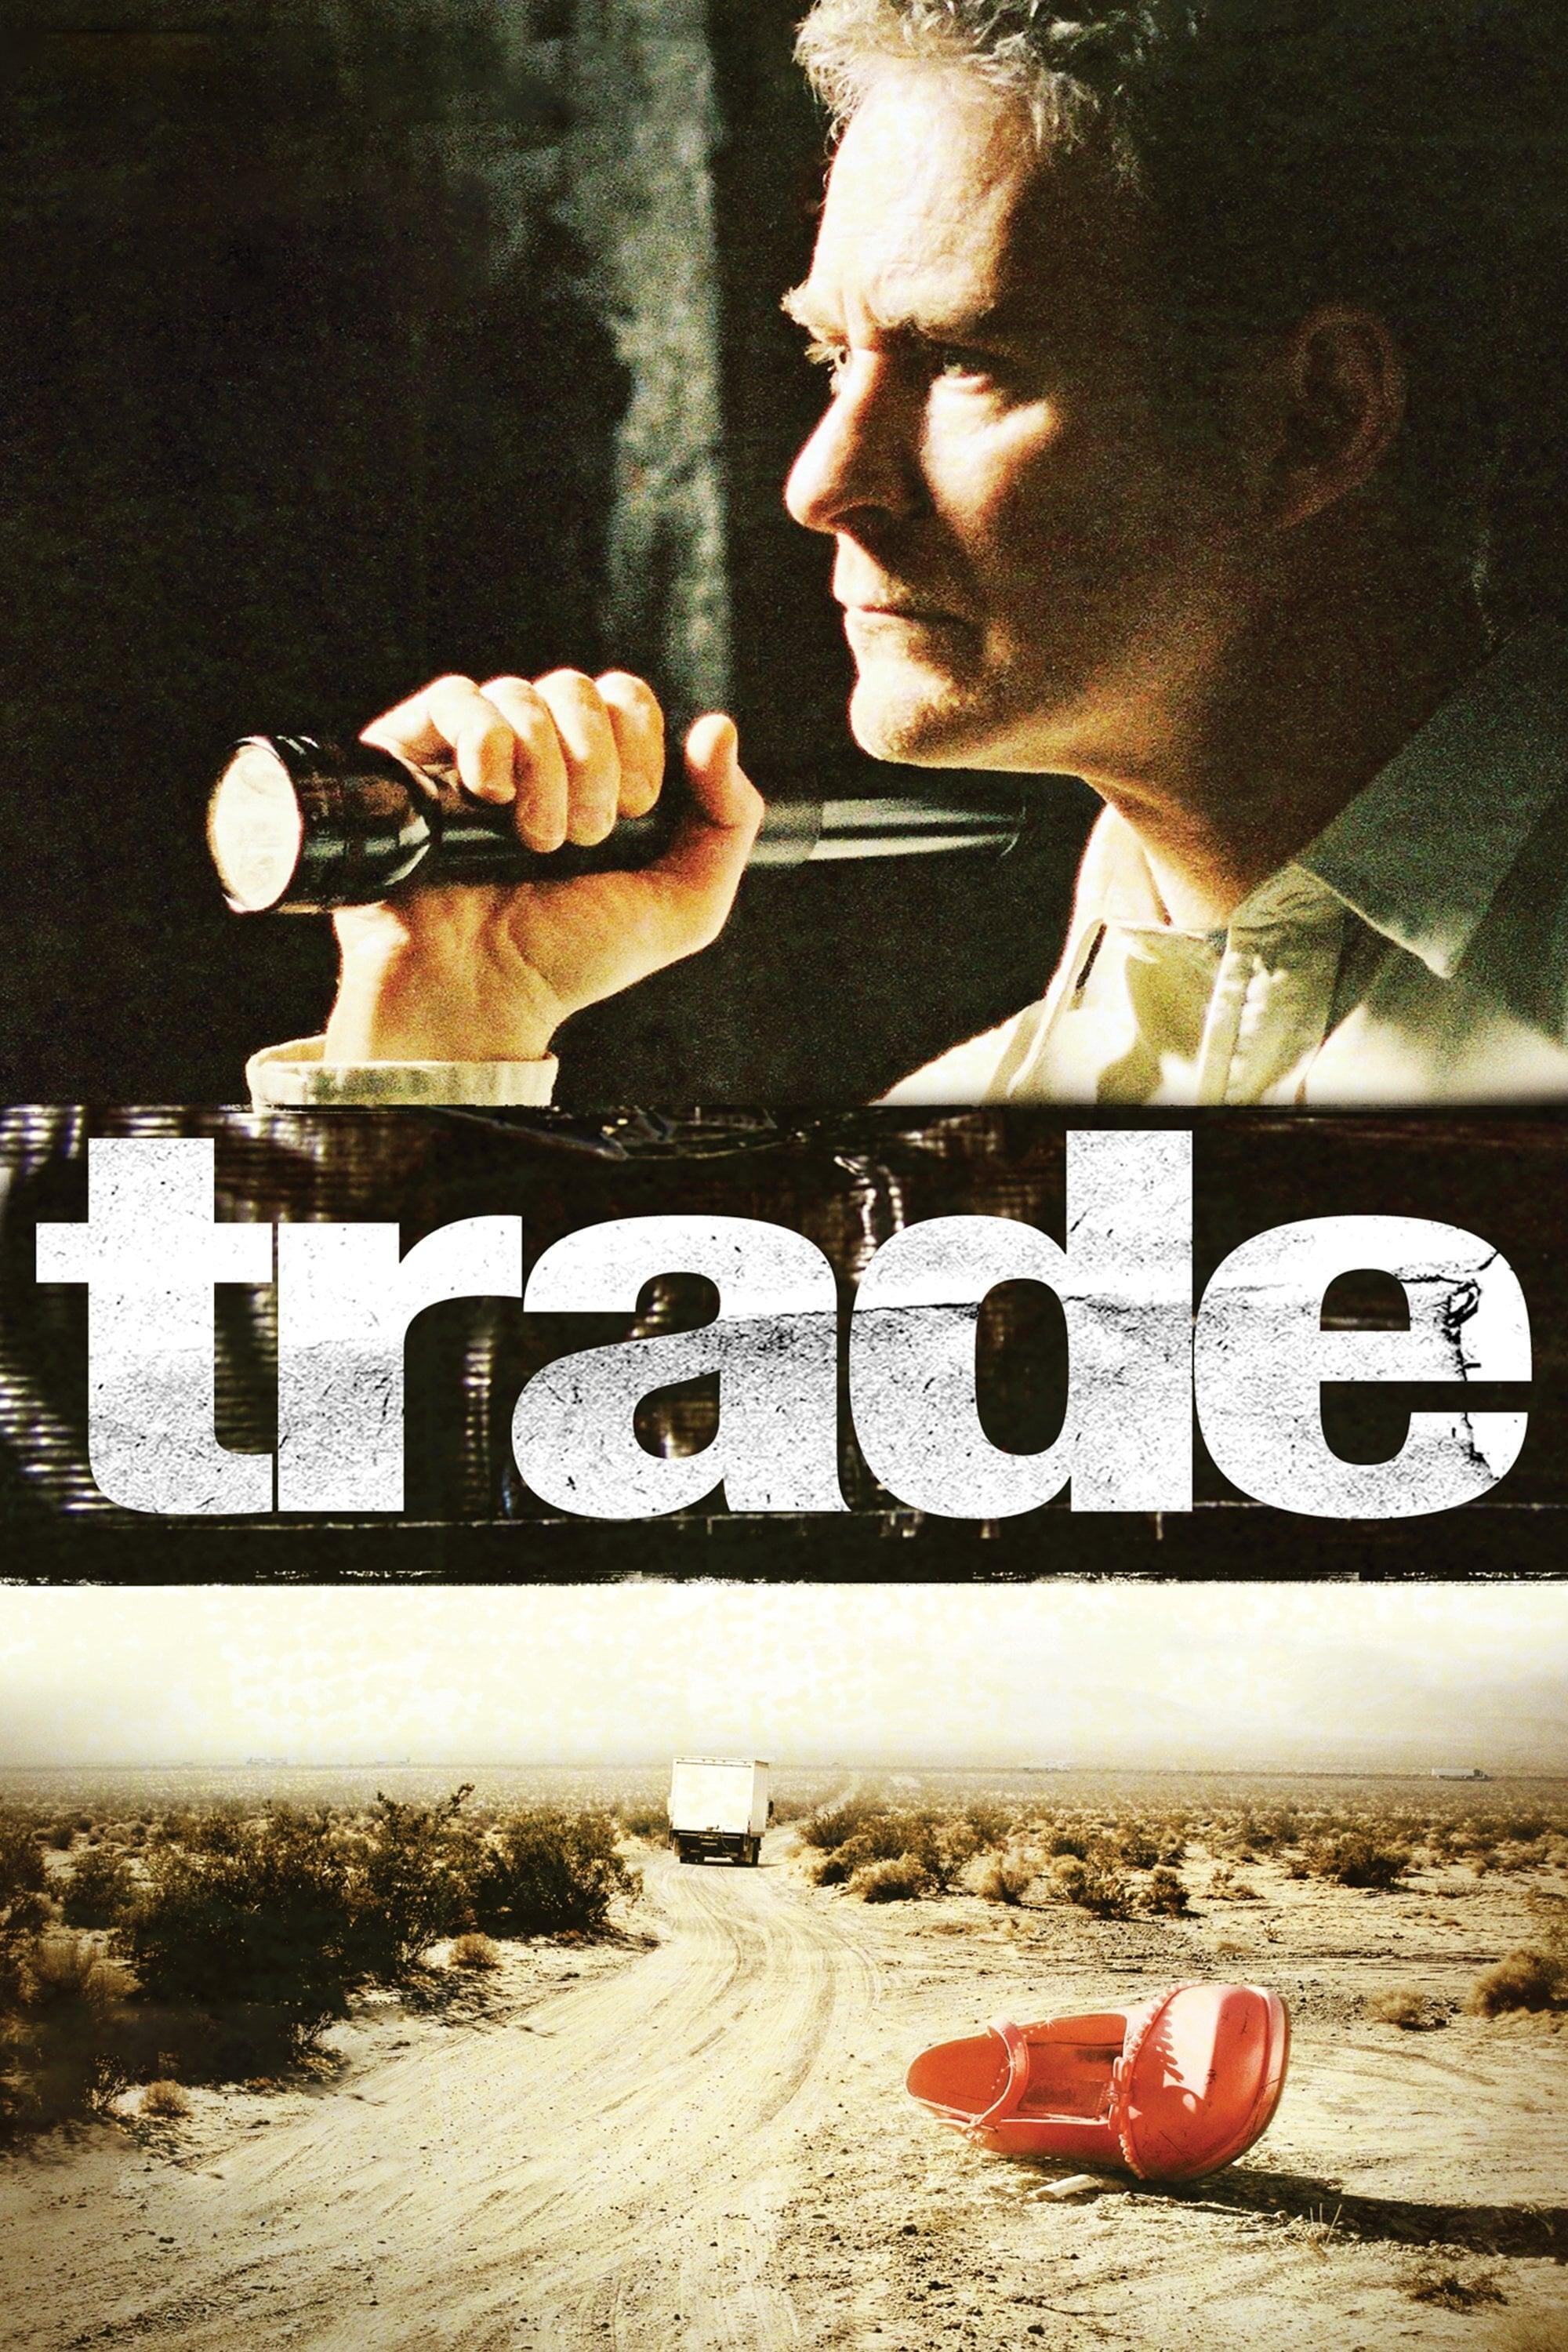 Trade poster